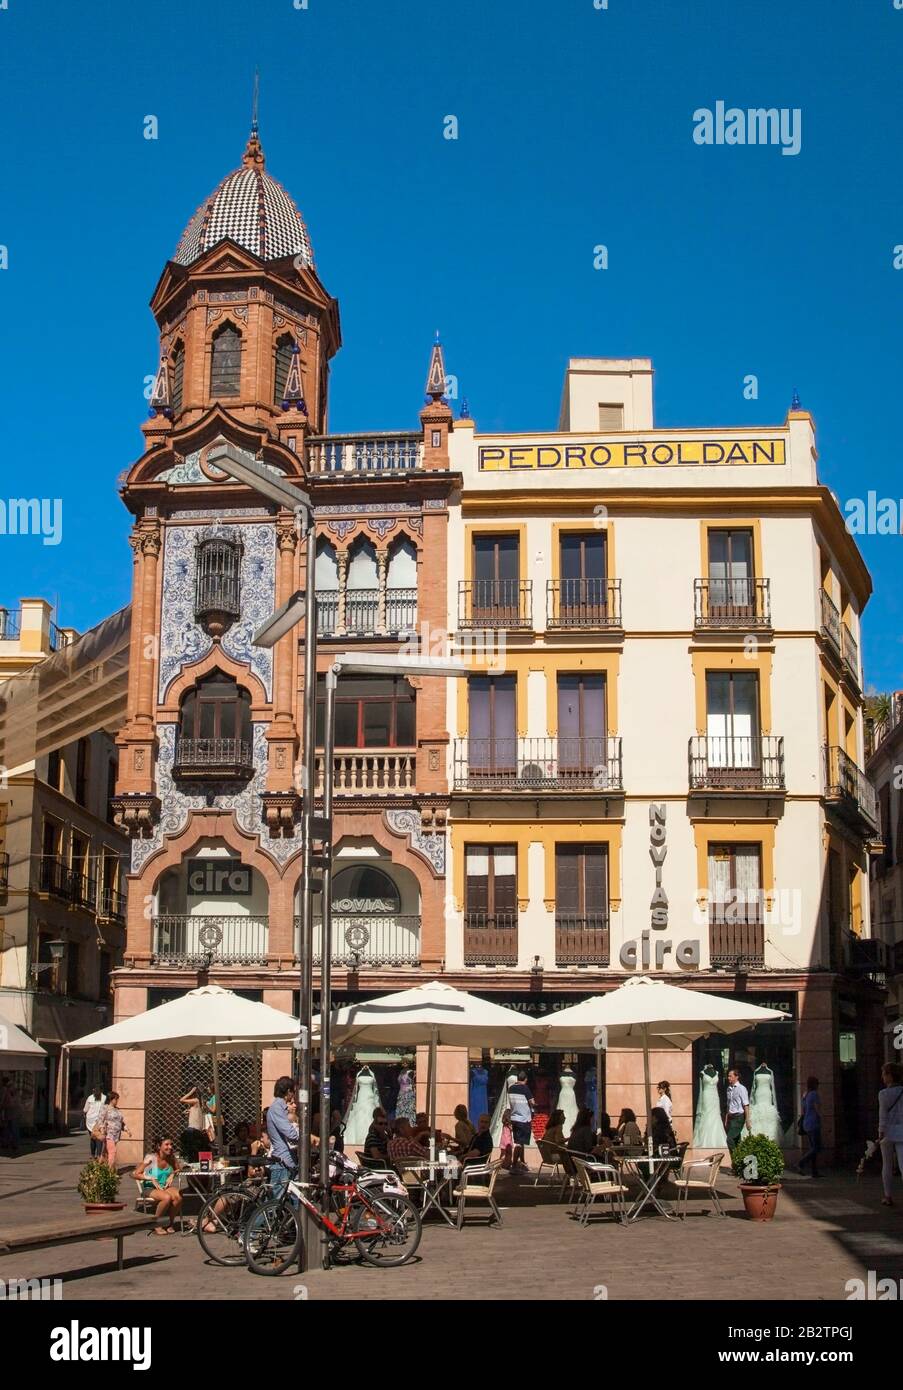 Pedro Roldan building, Seville, Spain Stock Photo